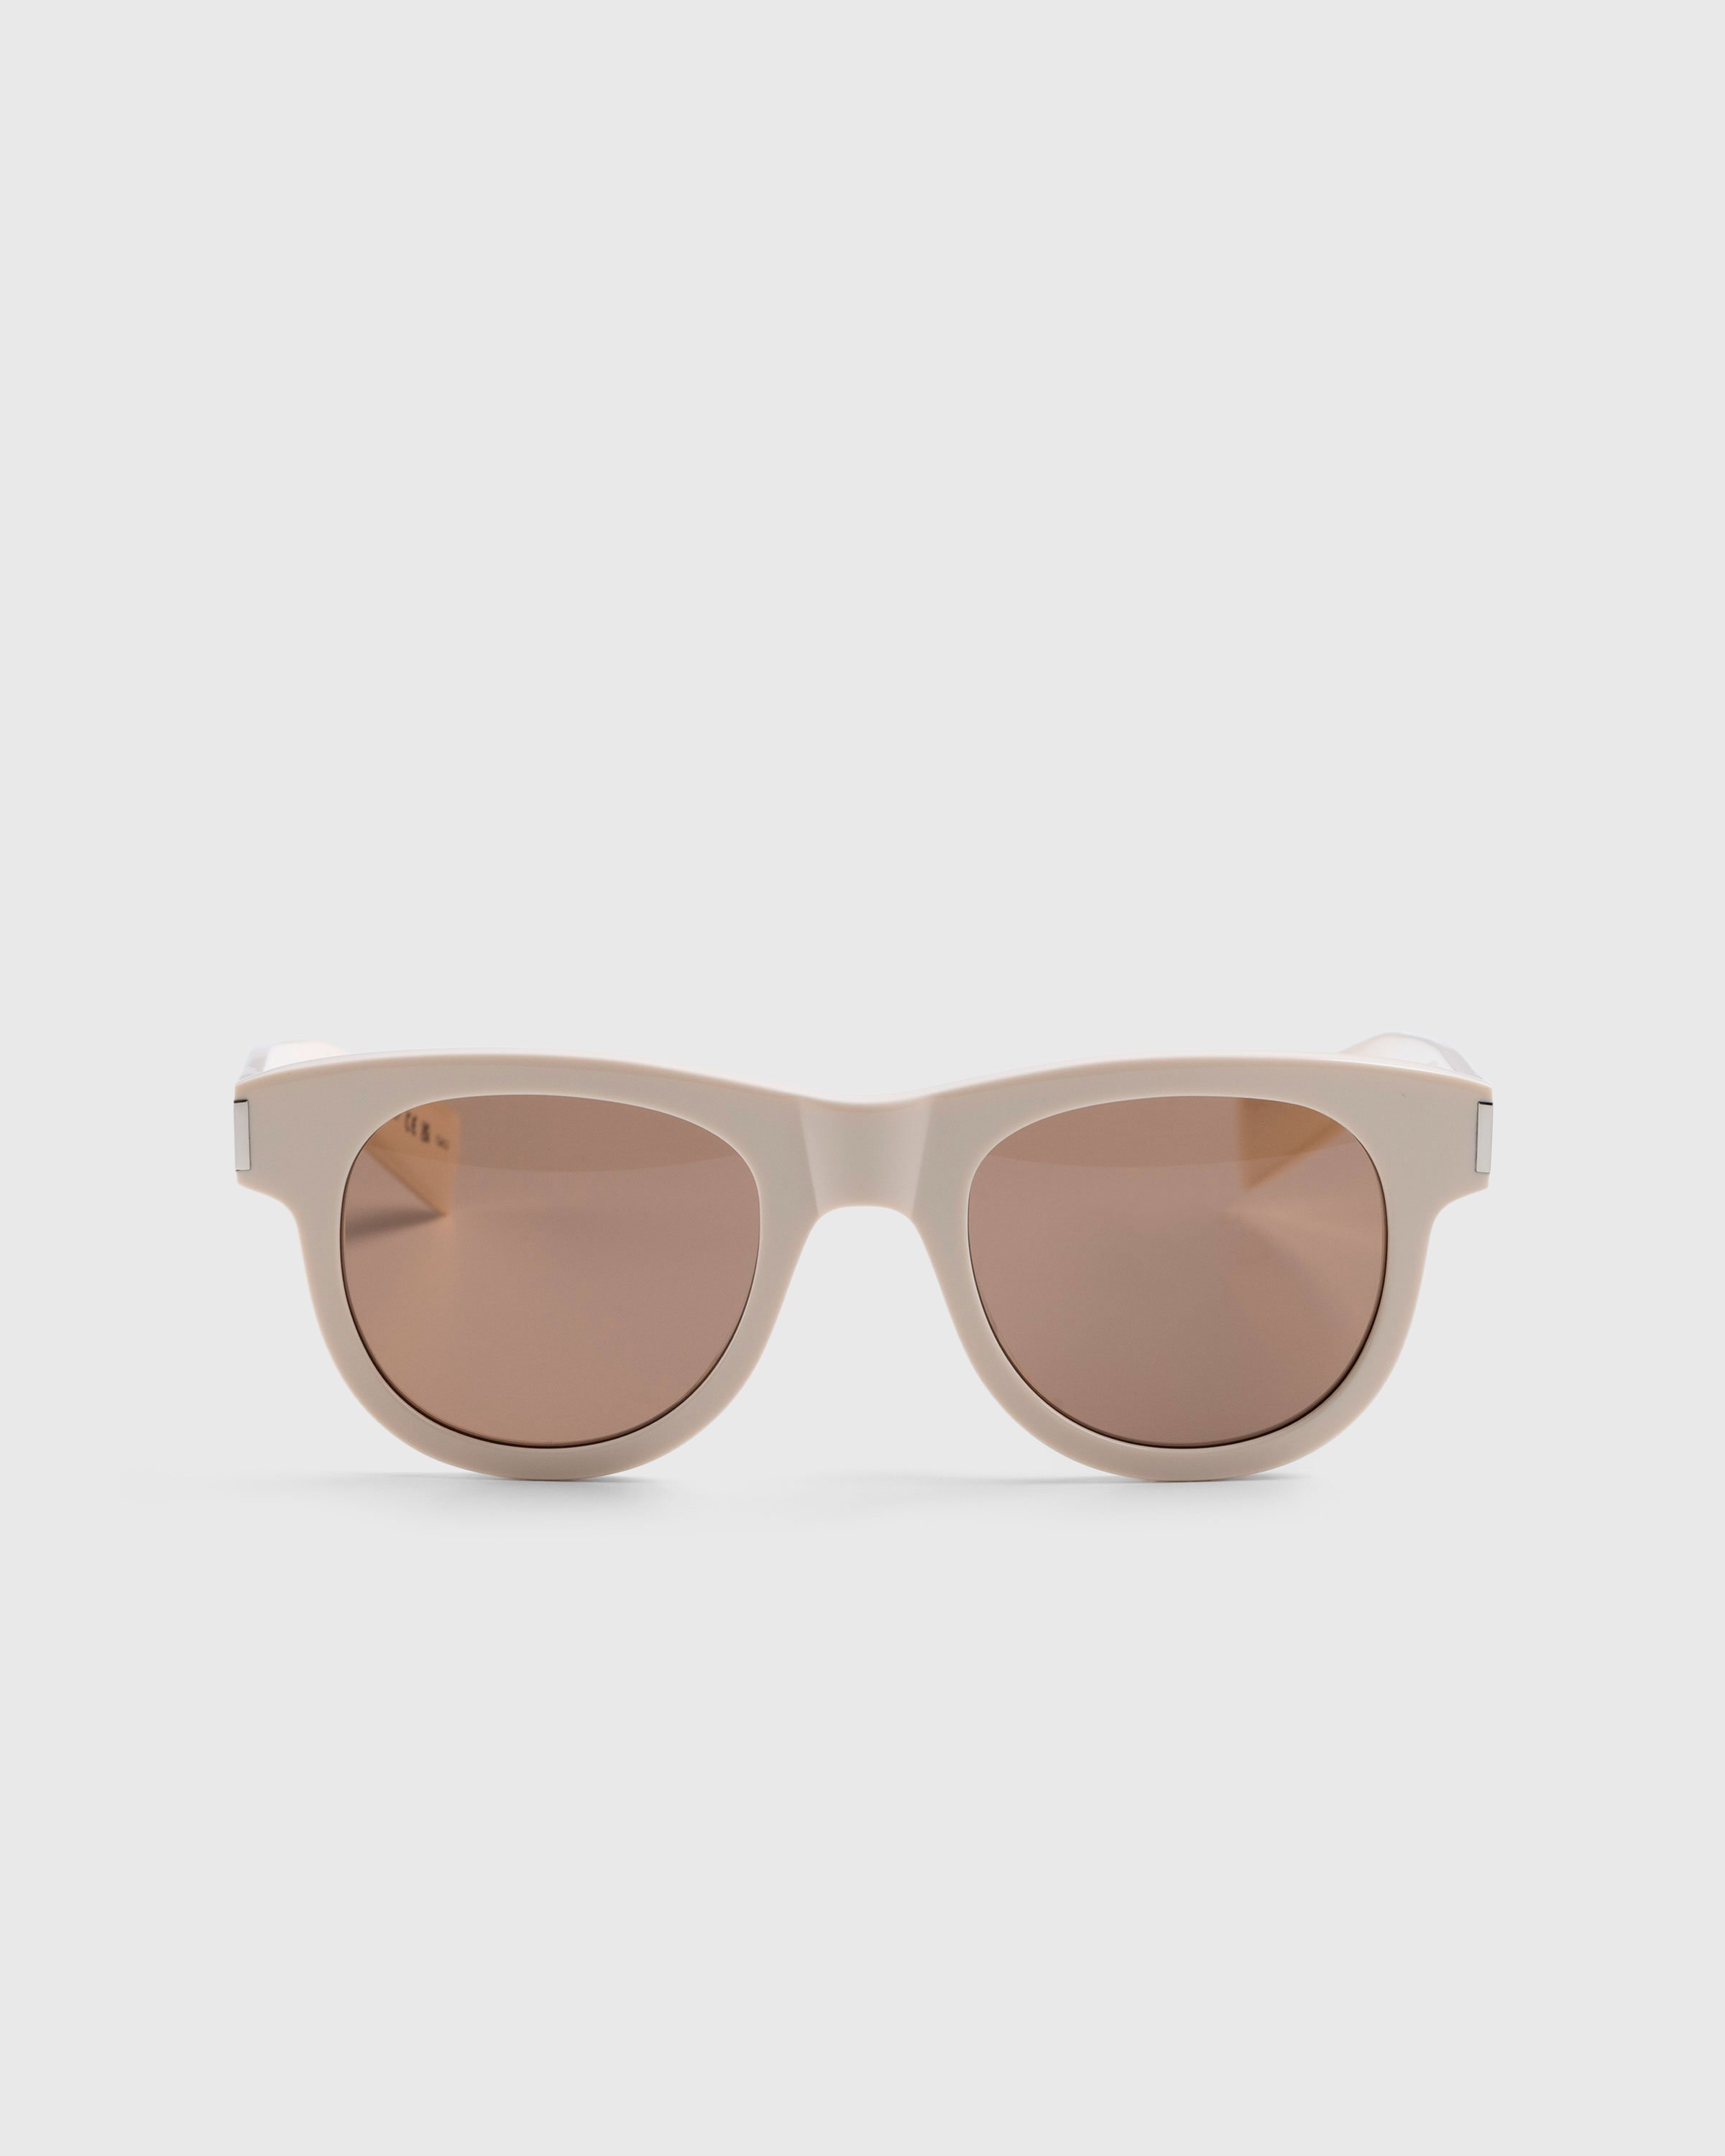 Saint Laurent - SL 571 Round Frame Sunglasses Ivory/Brown - Accessories - Multi - Image 1